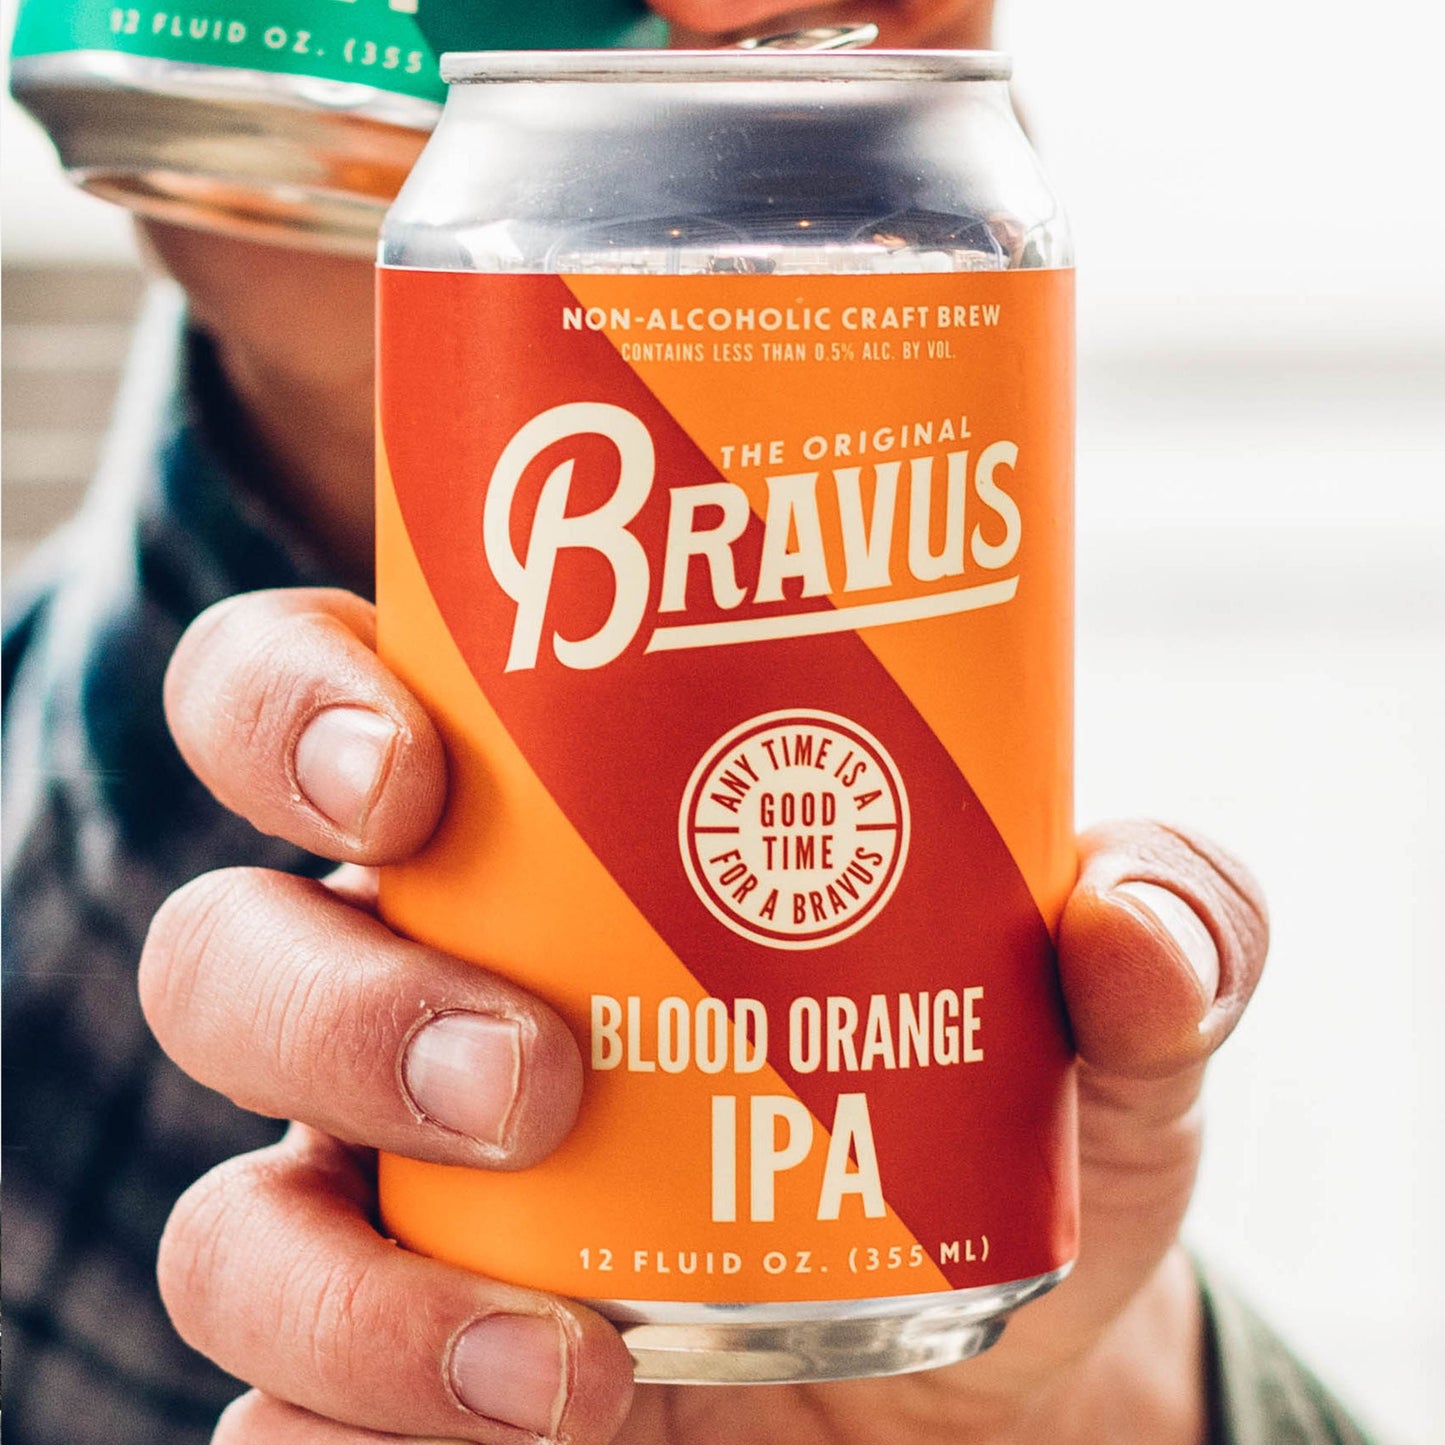 Blood Orange IPA by Bravus Brewing Company